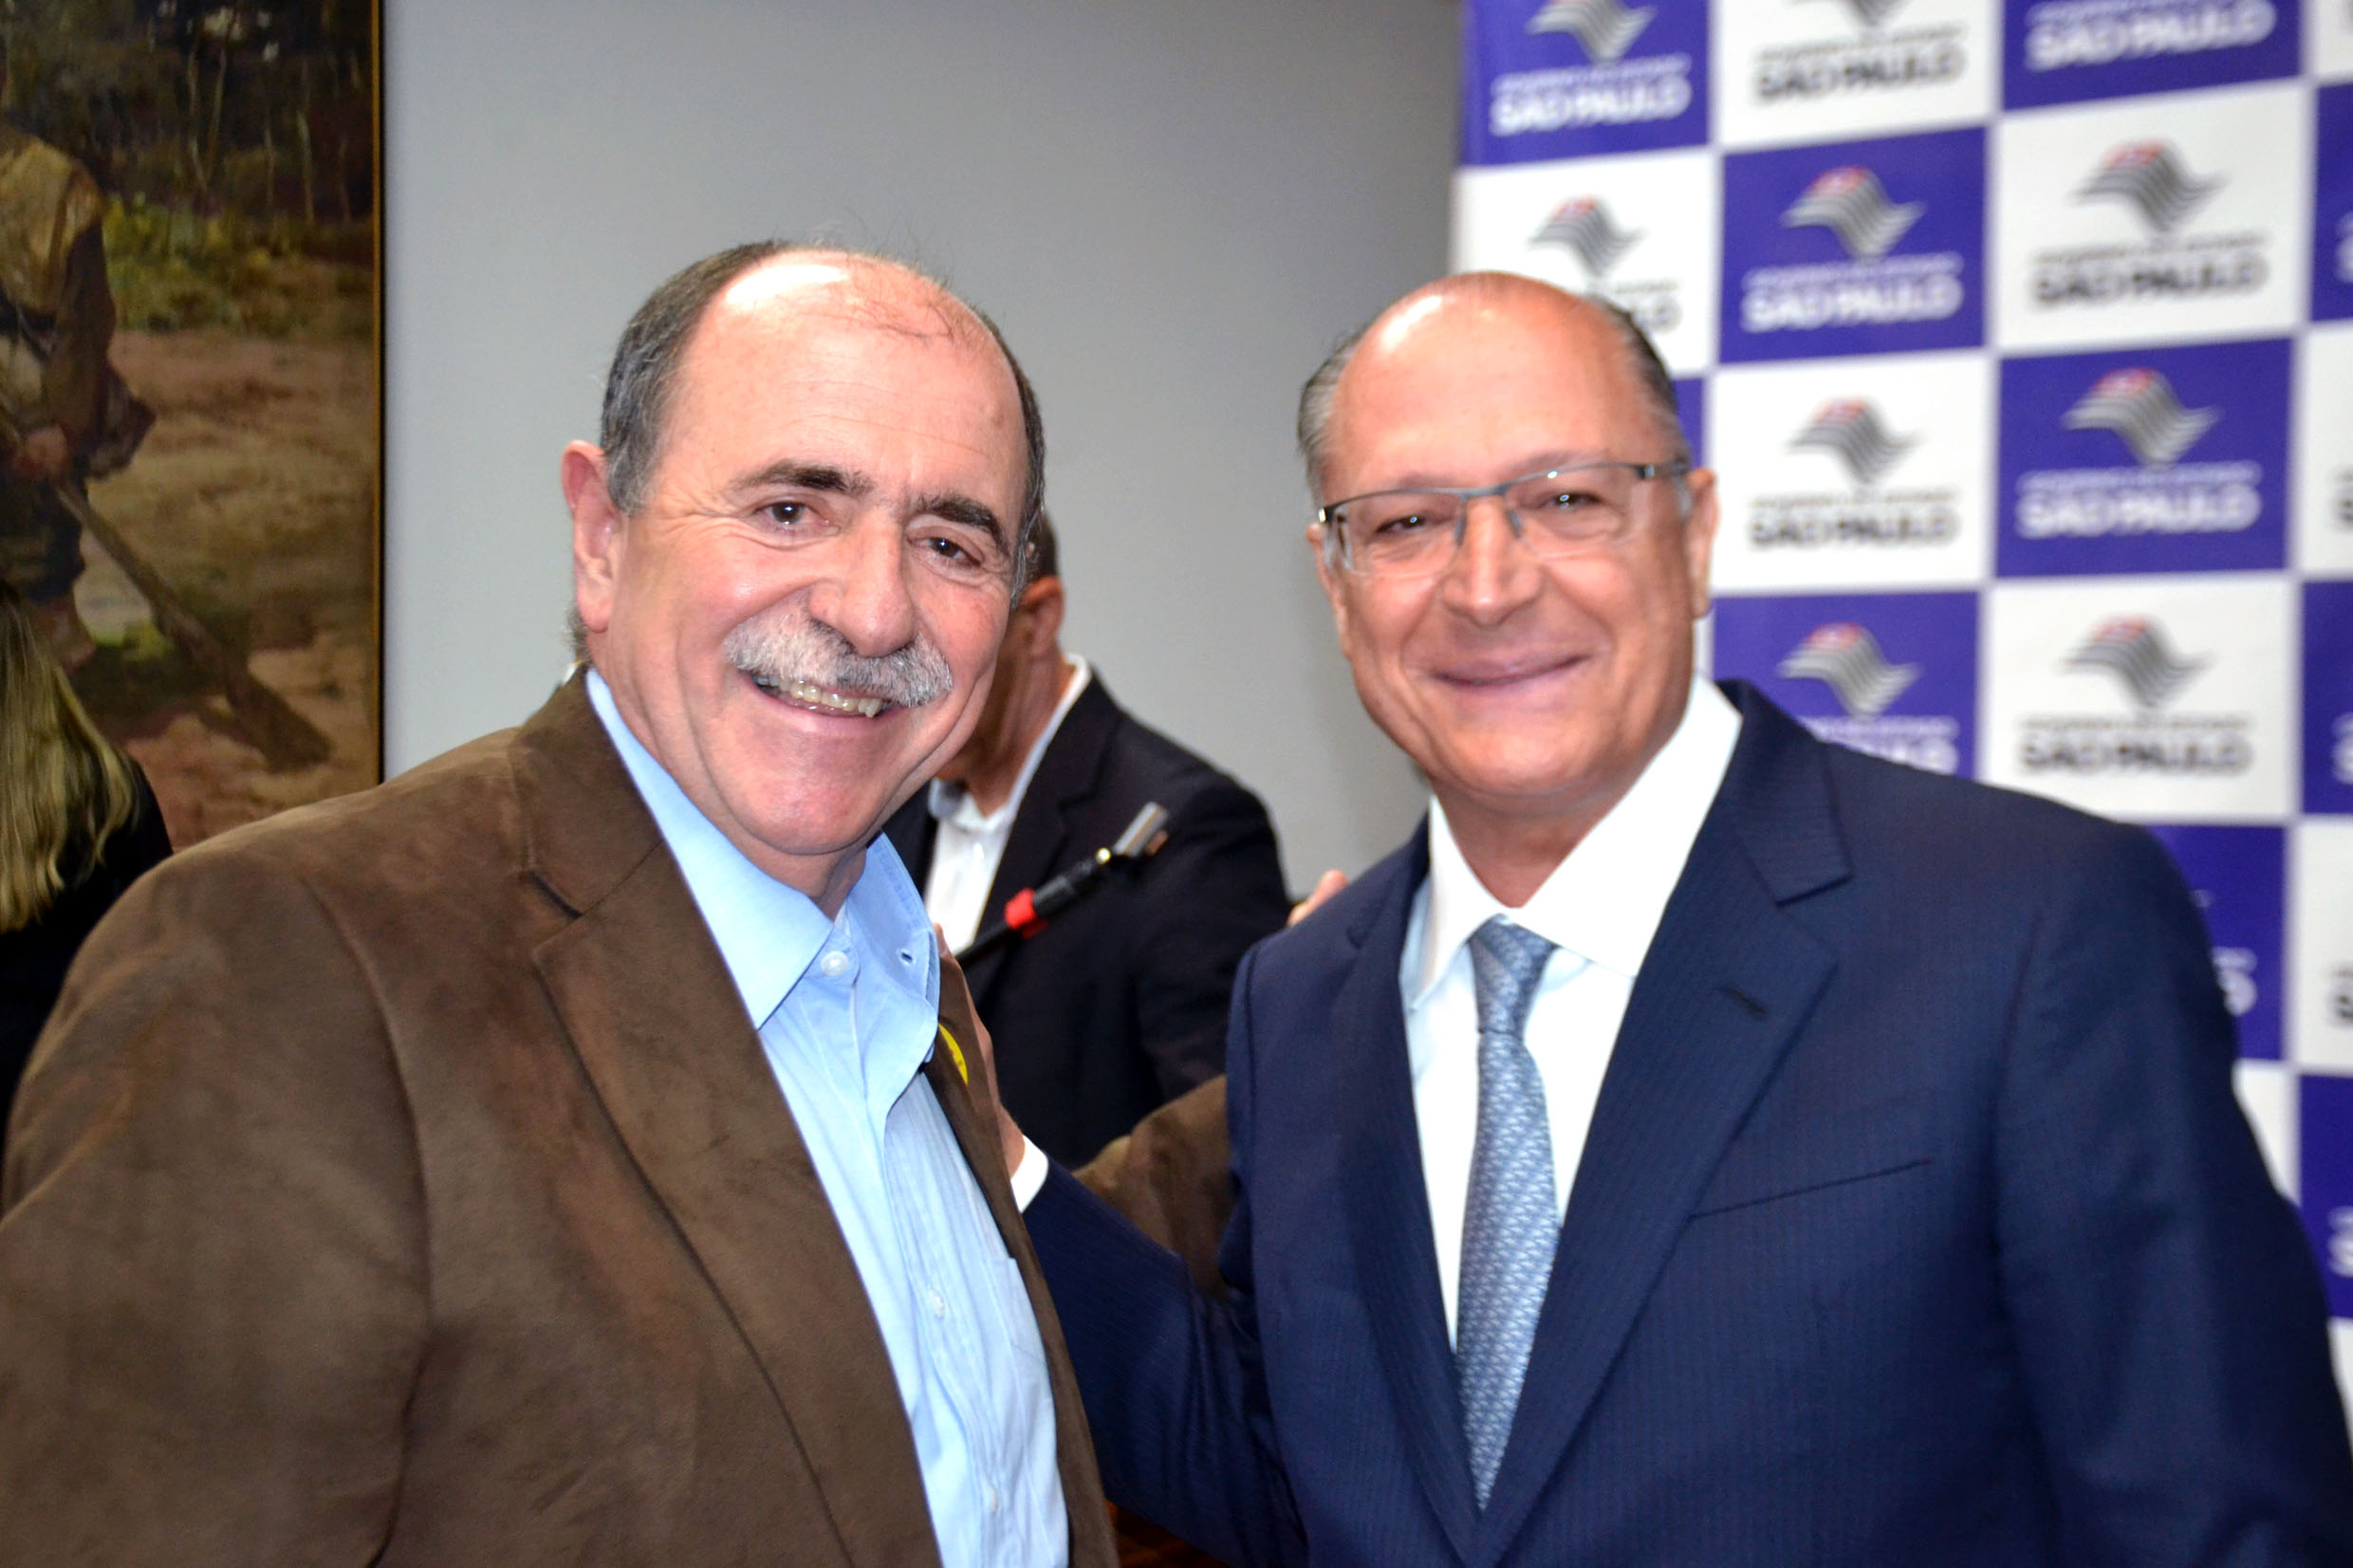 Joo Caramez e Geraldo Alckmin<a style='float:right;color:#ccc' href='https://www3.al.sp.gov.br/repositorio/noticia/N-10-2017/fg211311.jpg' target=_blank><i class='bi bi-zoom-in'></i> Clique para ver a imagem </a>